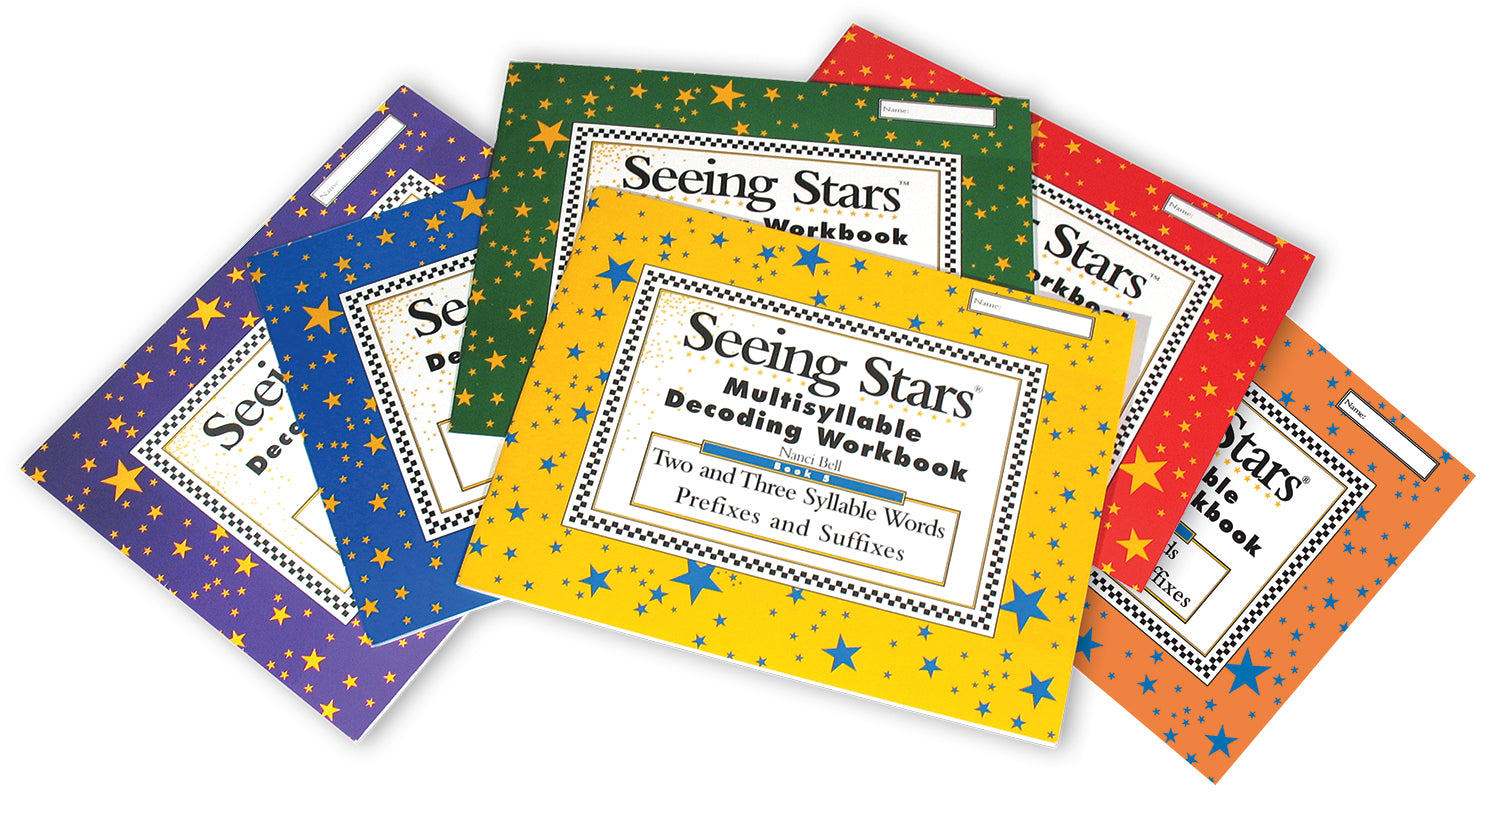 Seeing Stars® Decoding Workbooks